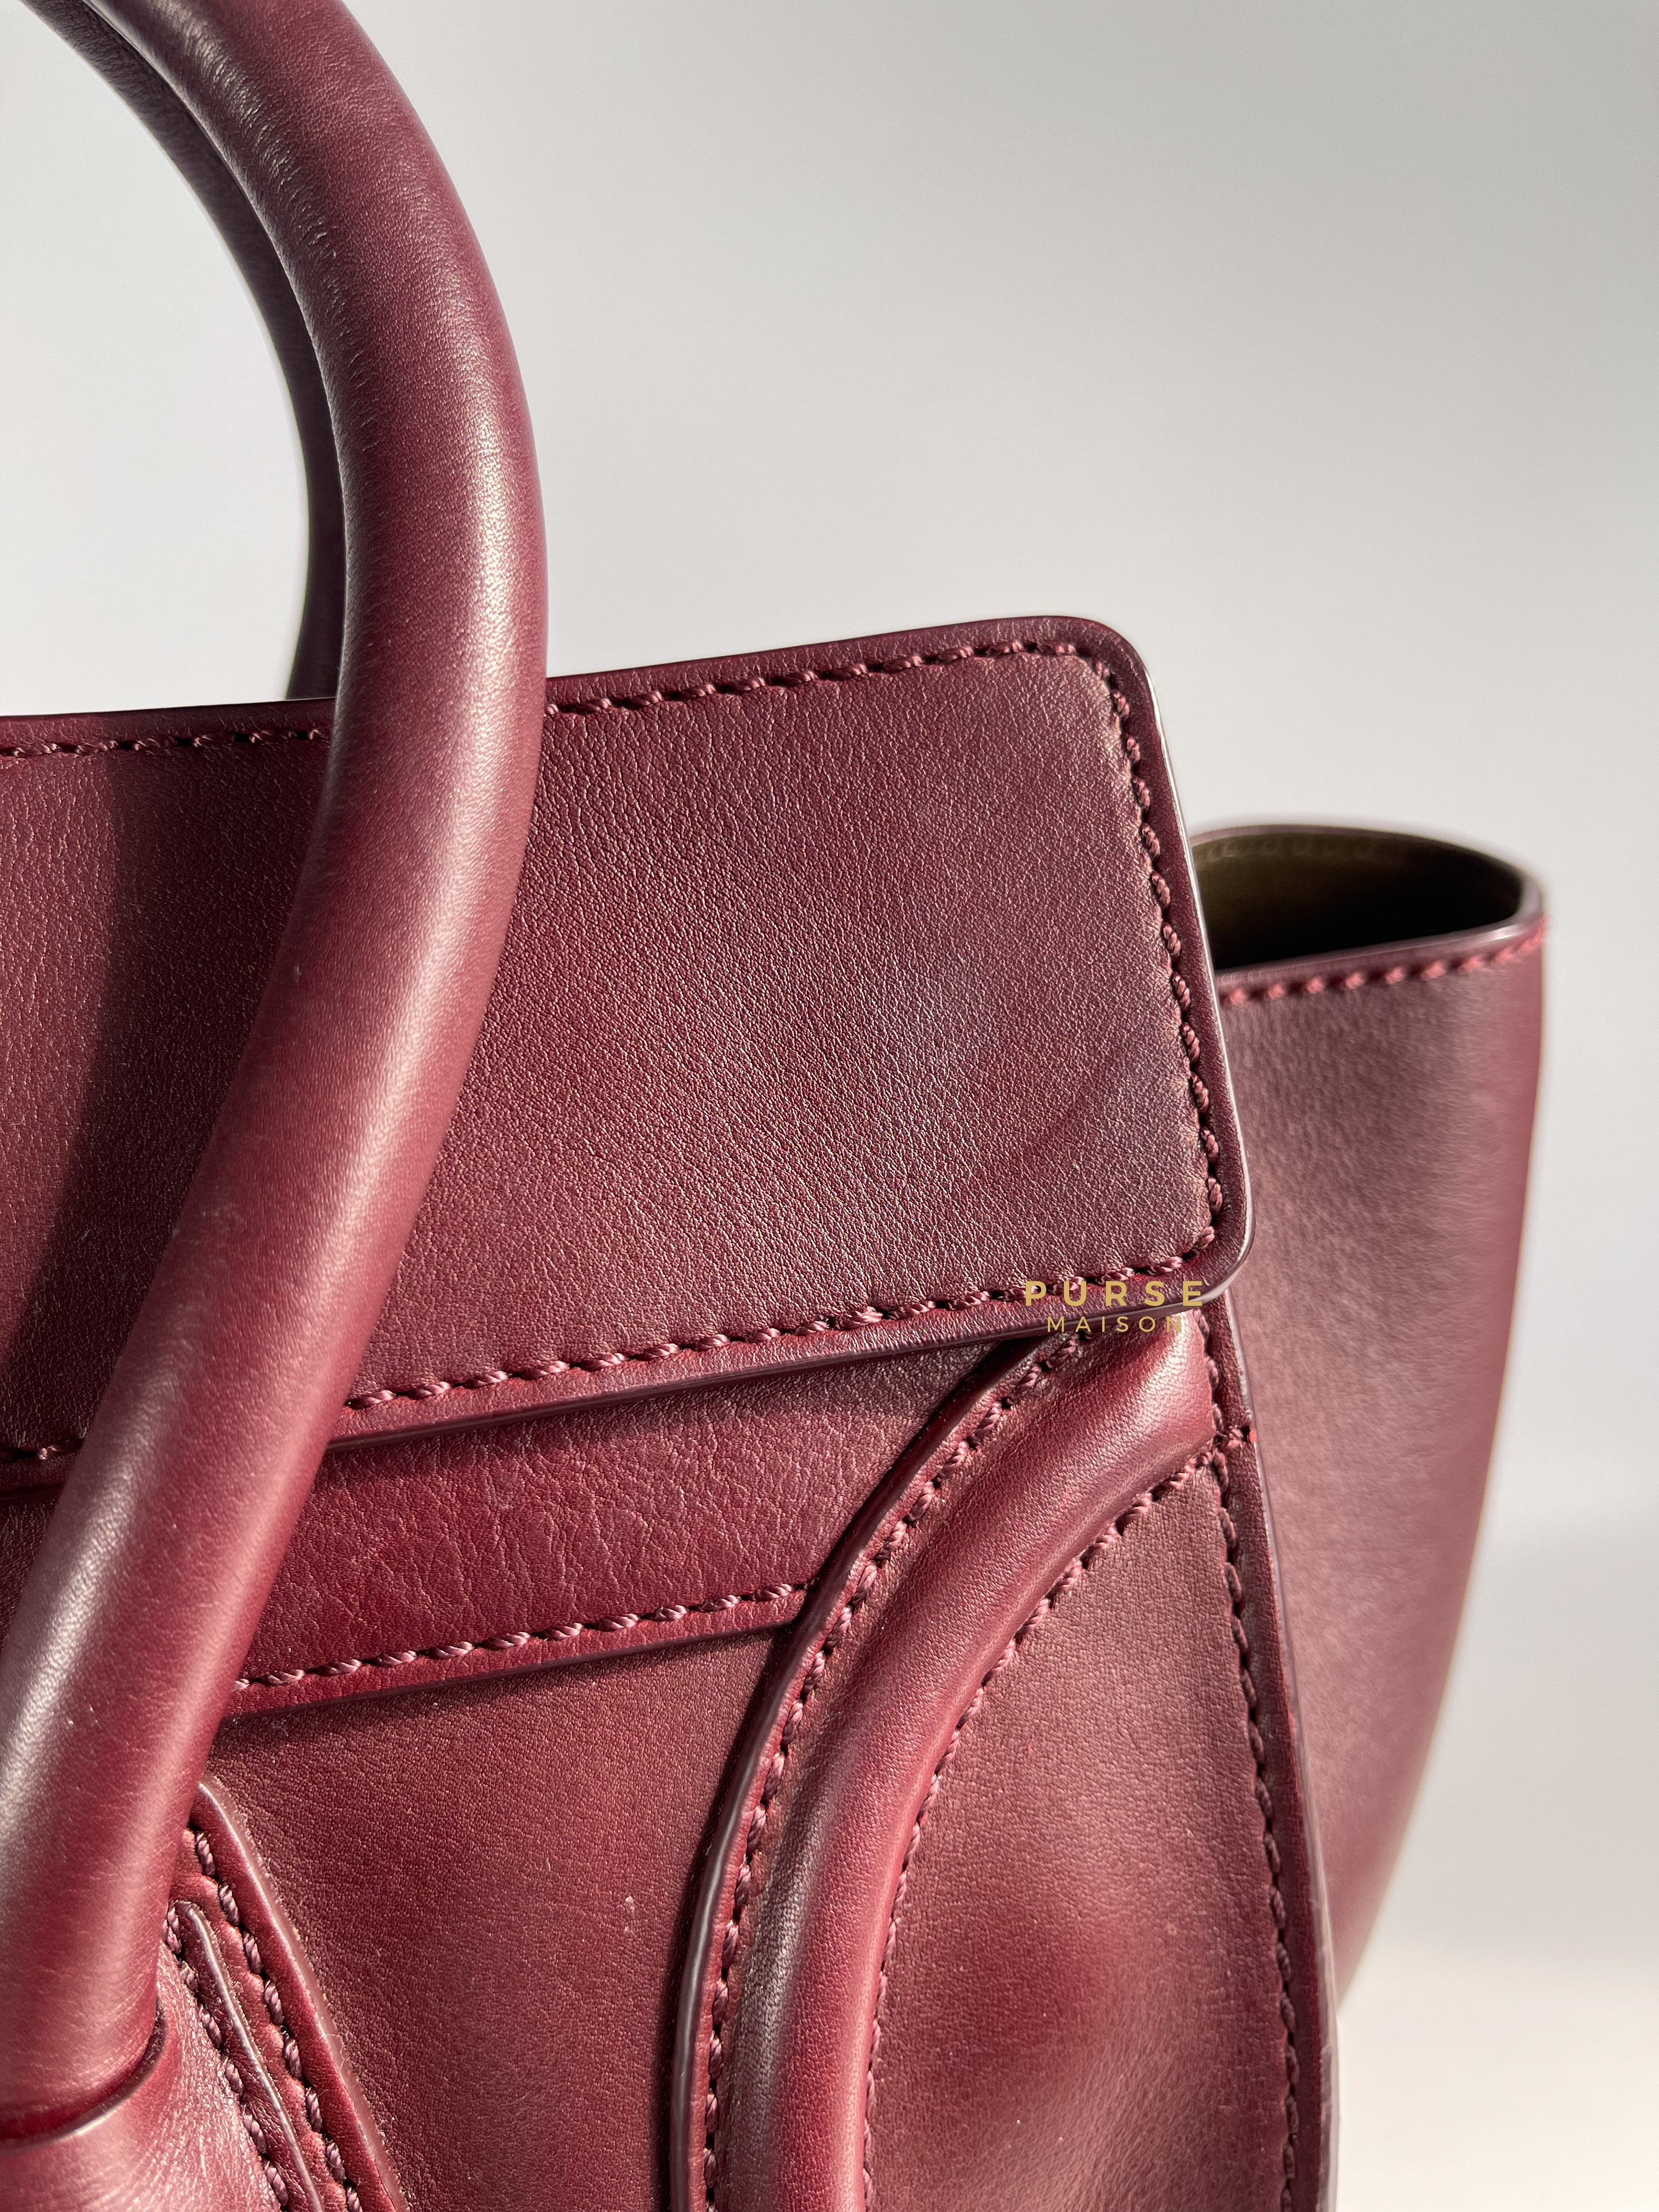 Celine Burgundy Smooth Calfskin Leather Mini Luggage Tote Bag | Purse Maison Luxury Bags Shop